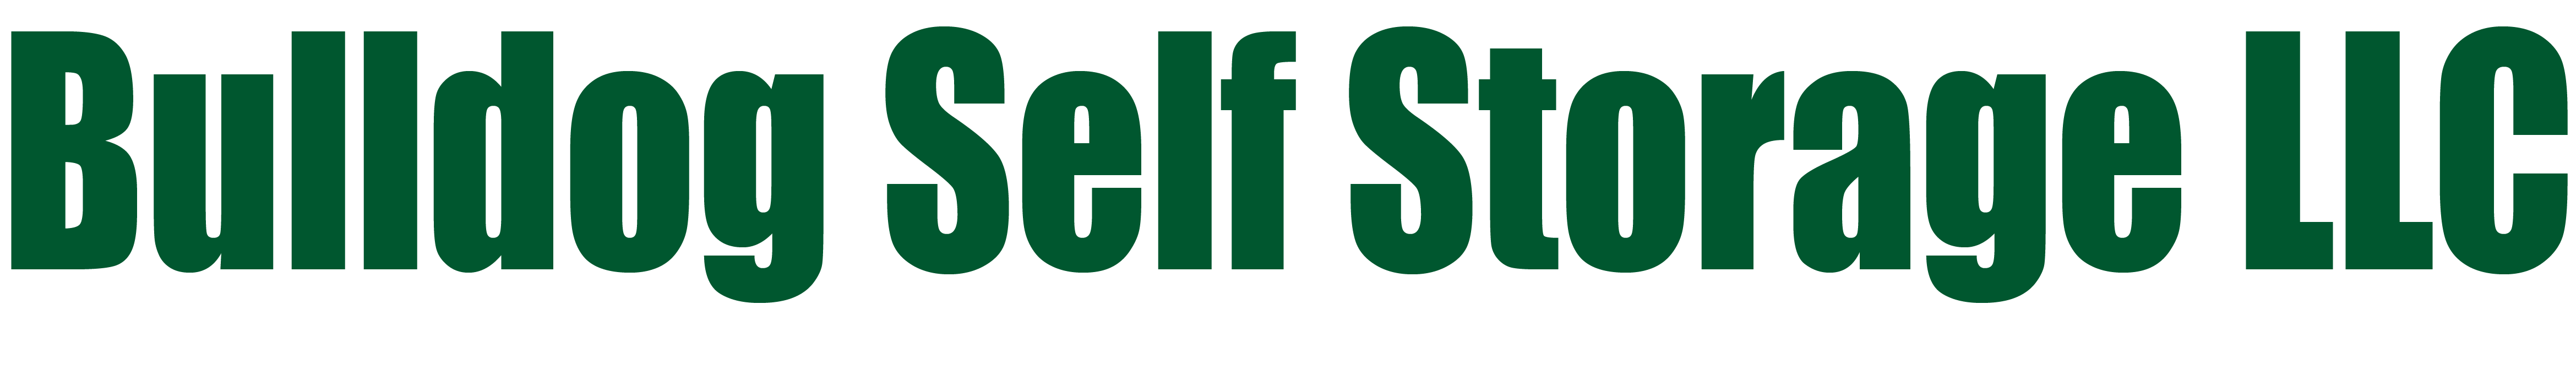 Bulldog Self Storage LLC logo